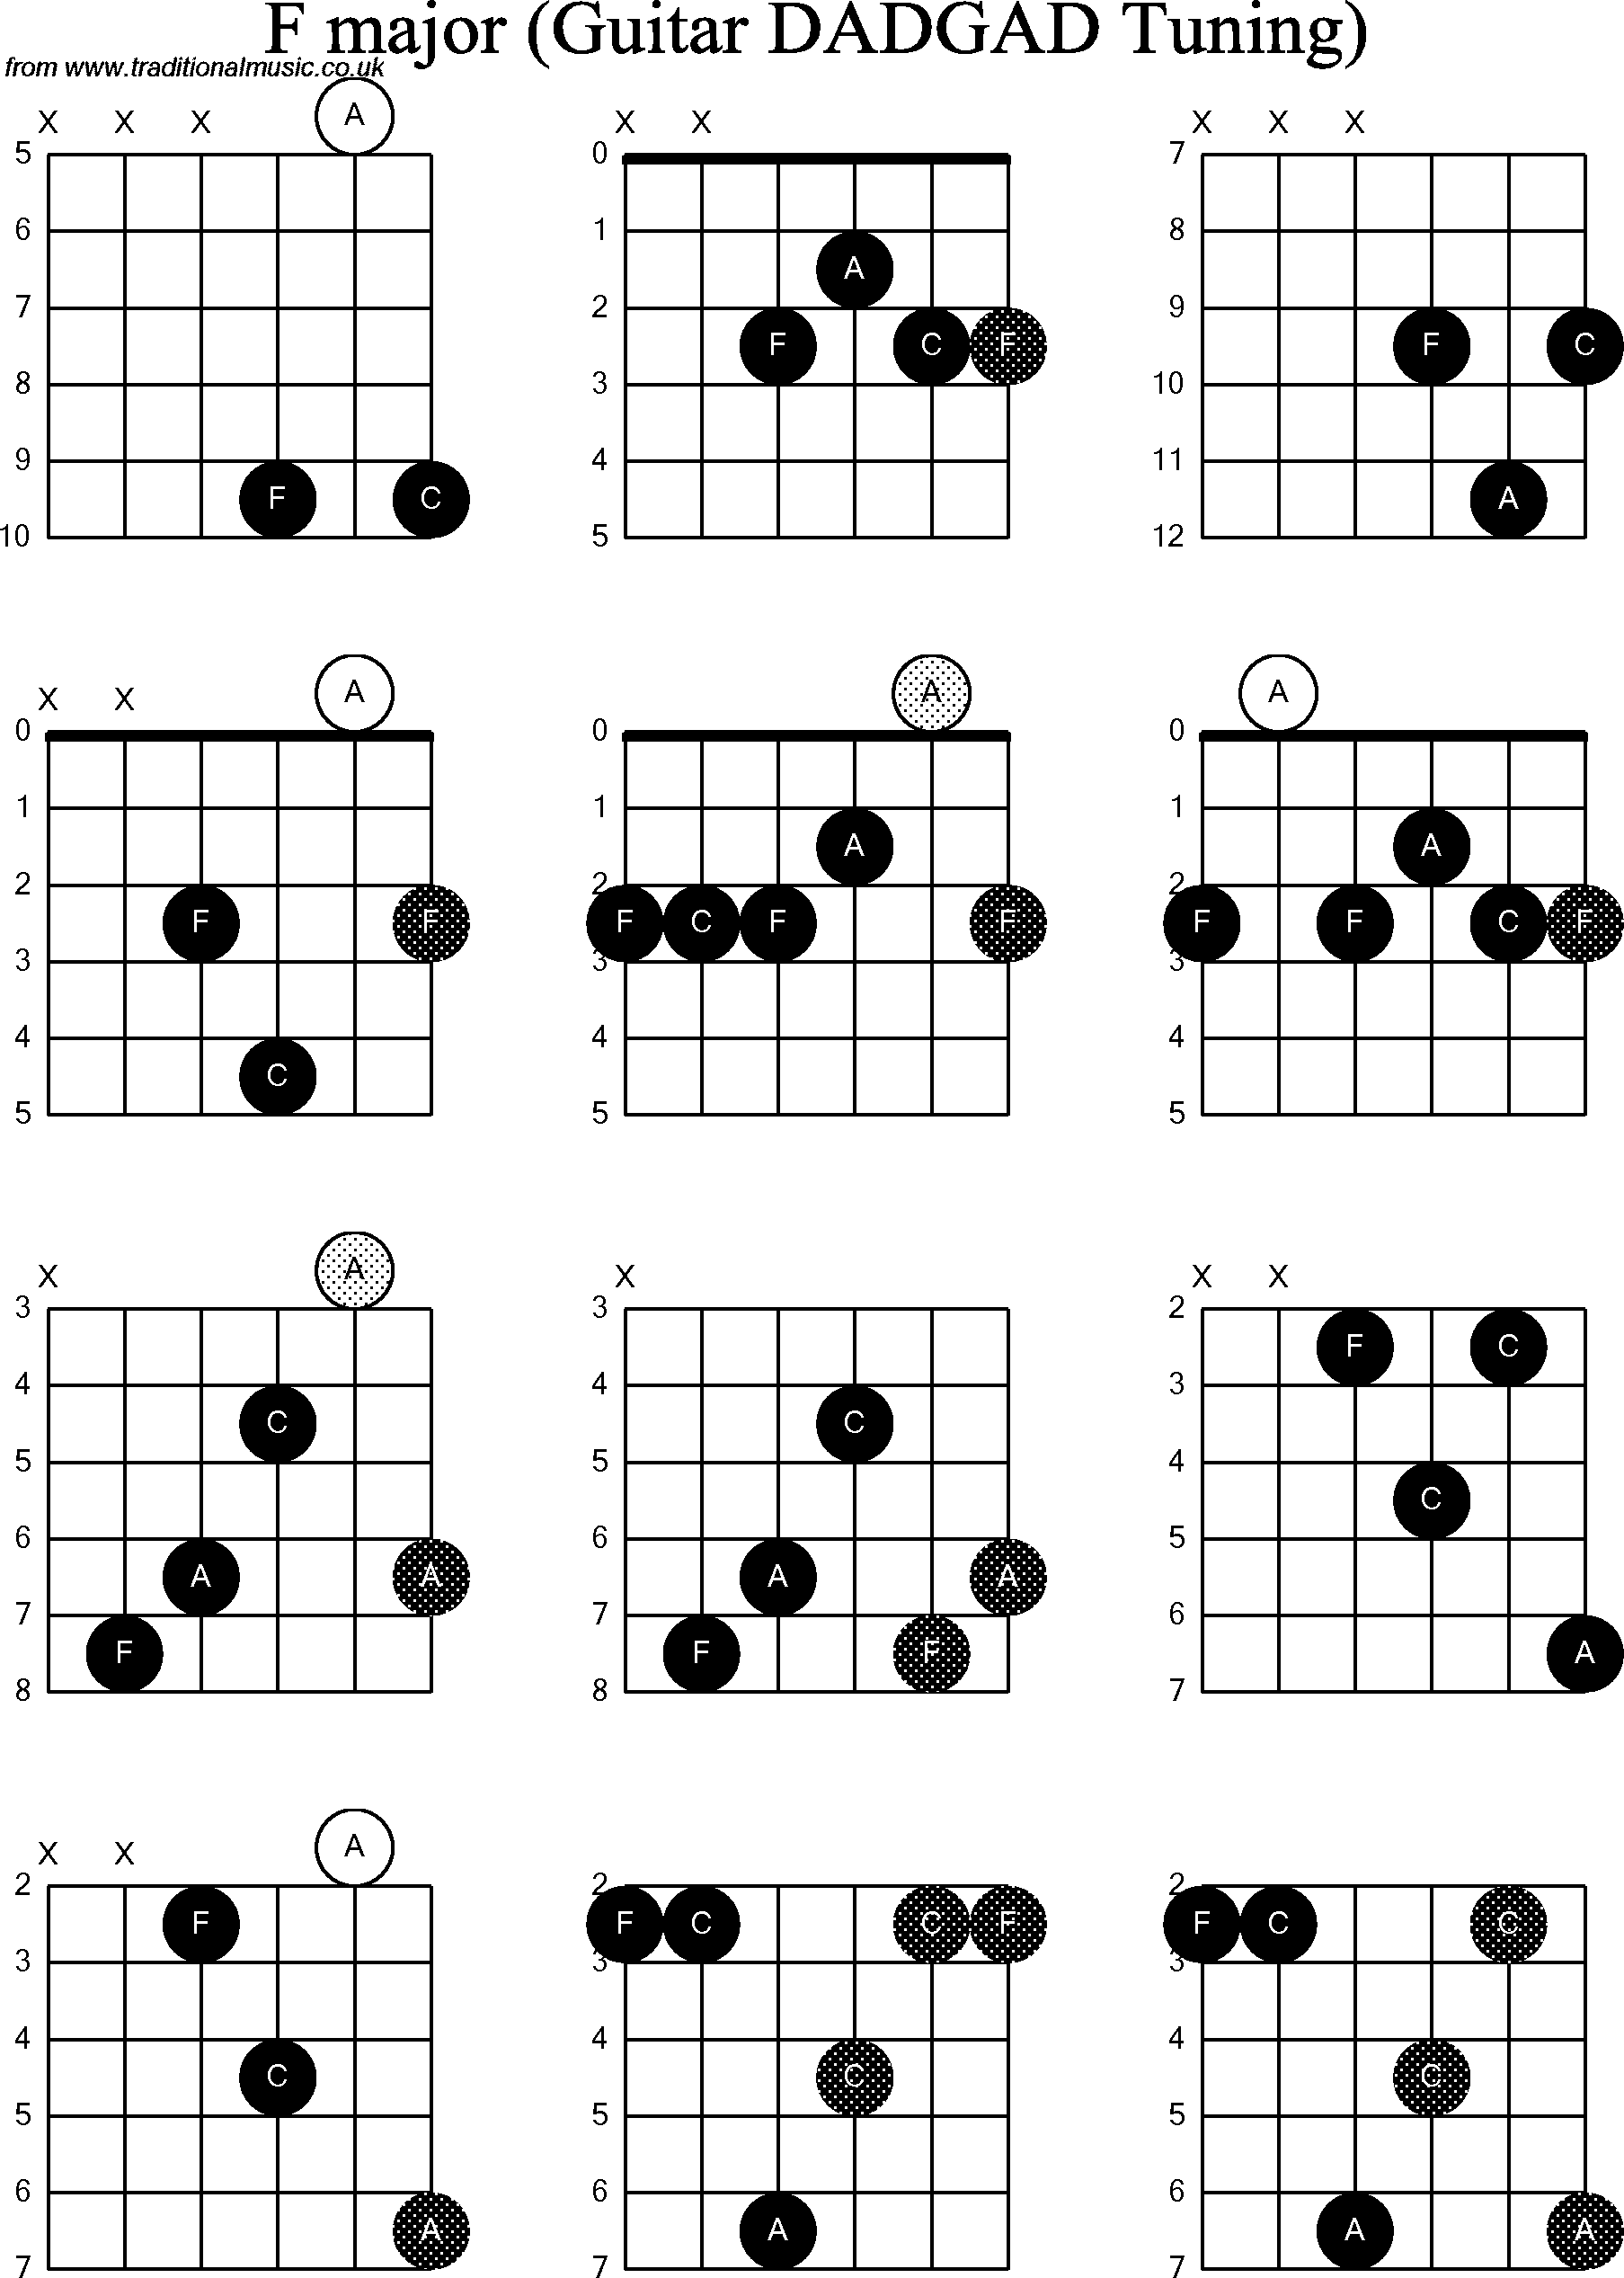 Chord Diagrams for D Modal Guitar(DADGAD), F